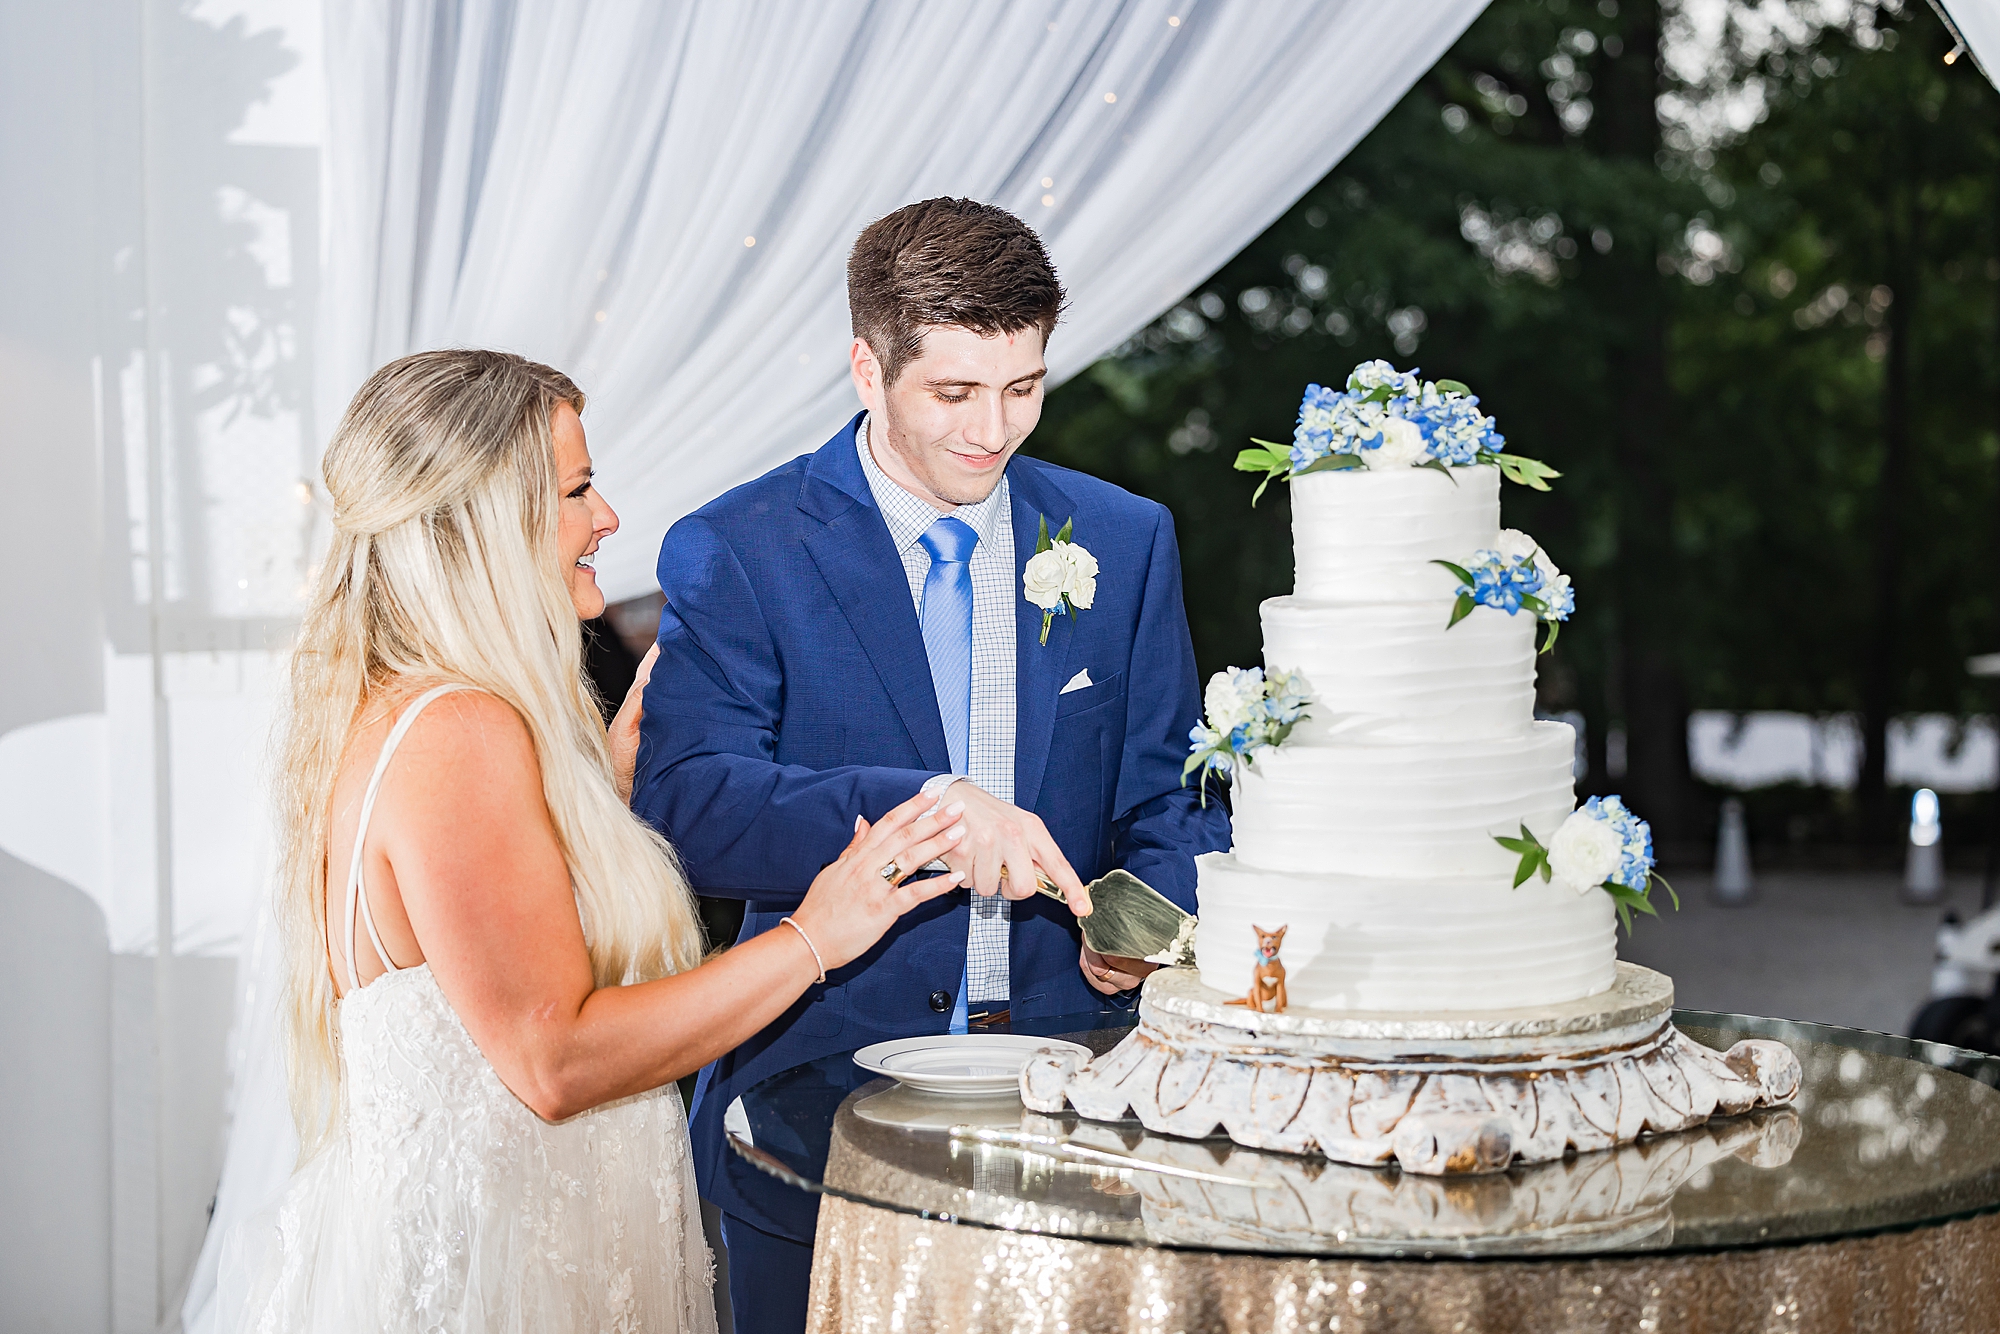 newlyweds cut wedding cake during Vintage White Barn wedding reception